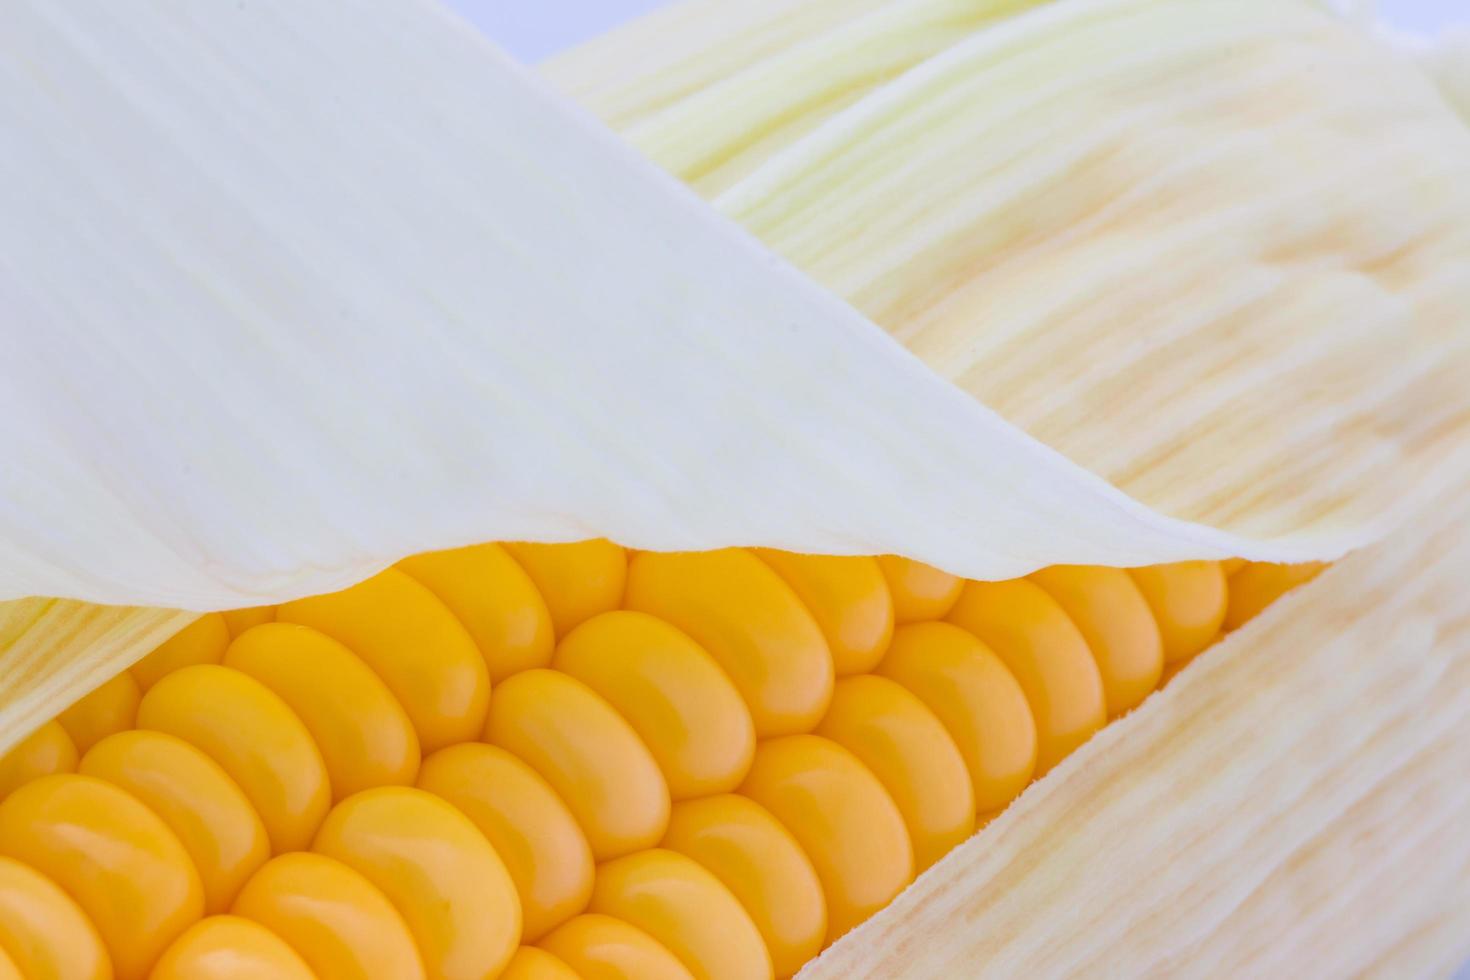 Grains of ripe corn macro image photo